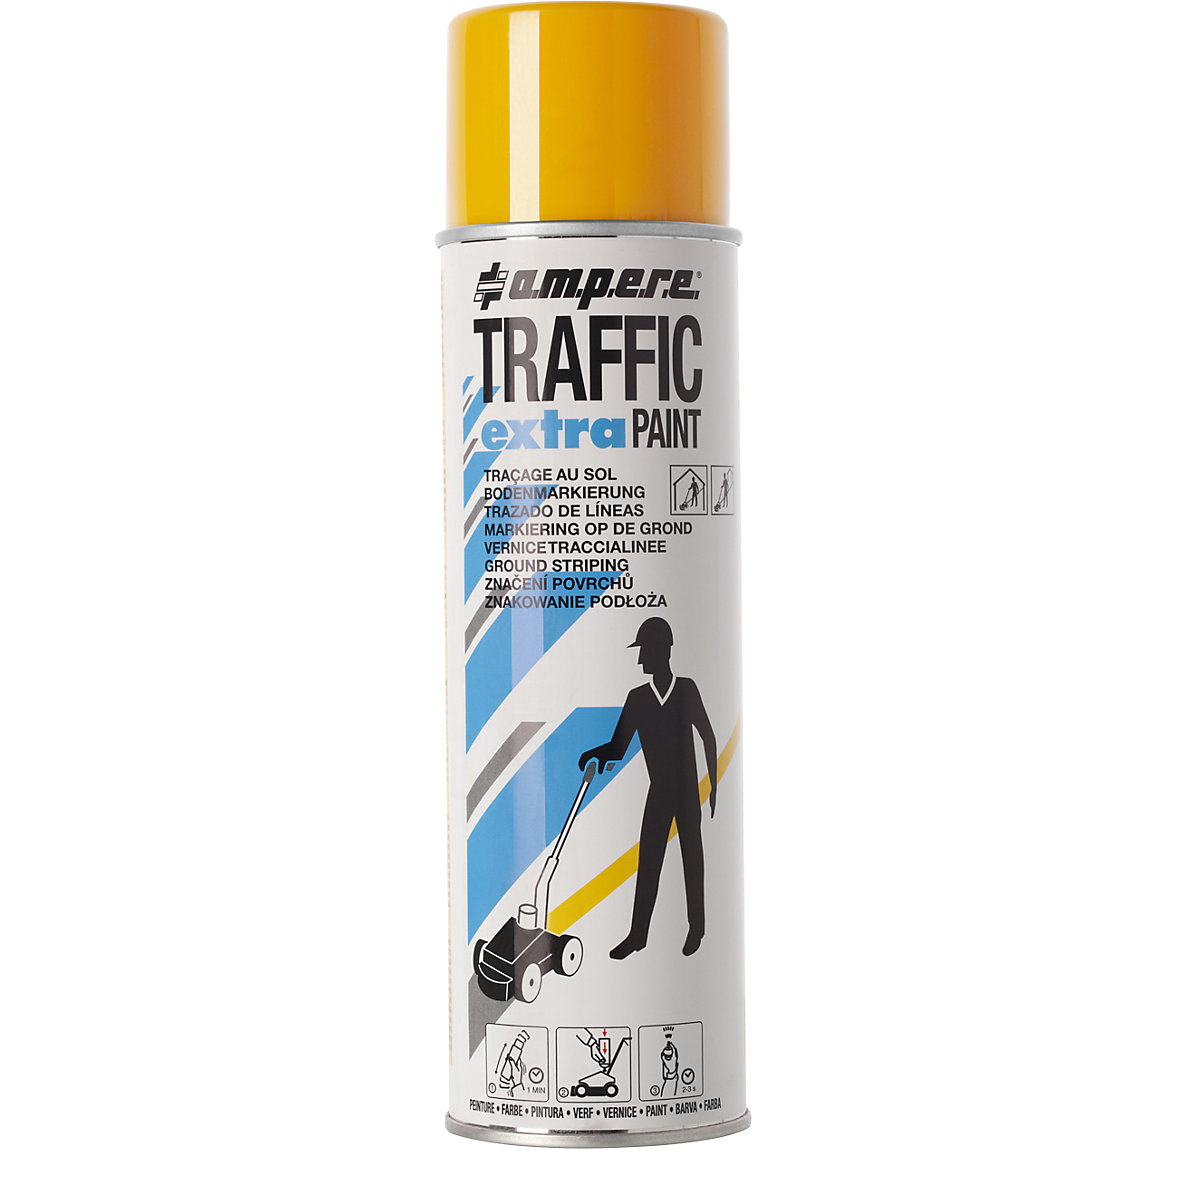 Vernice traccialinee Traffic extra Paint® per impieghi intensi - Ampere